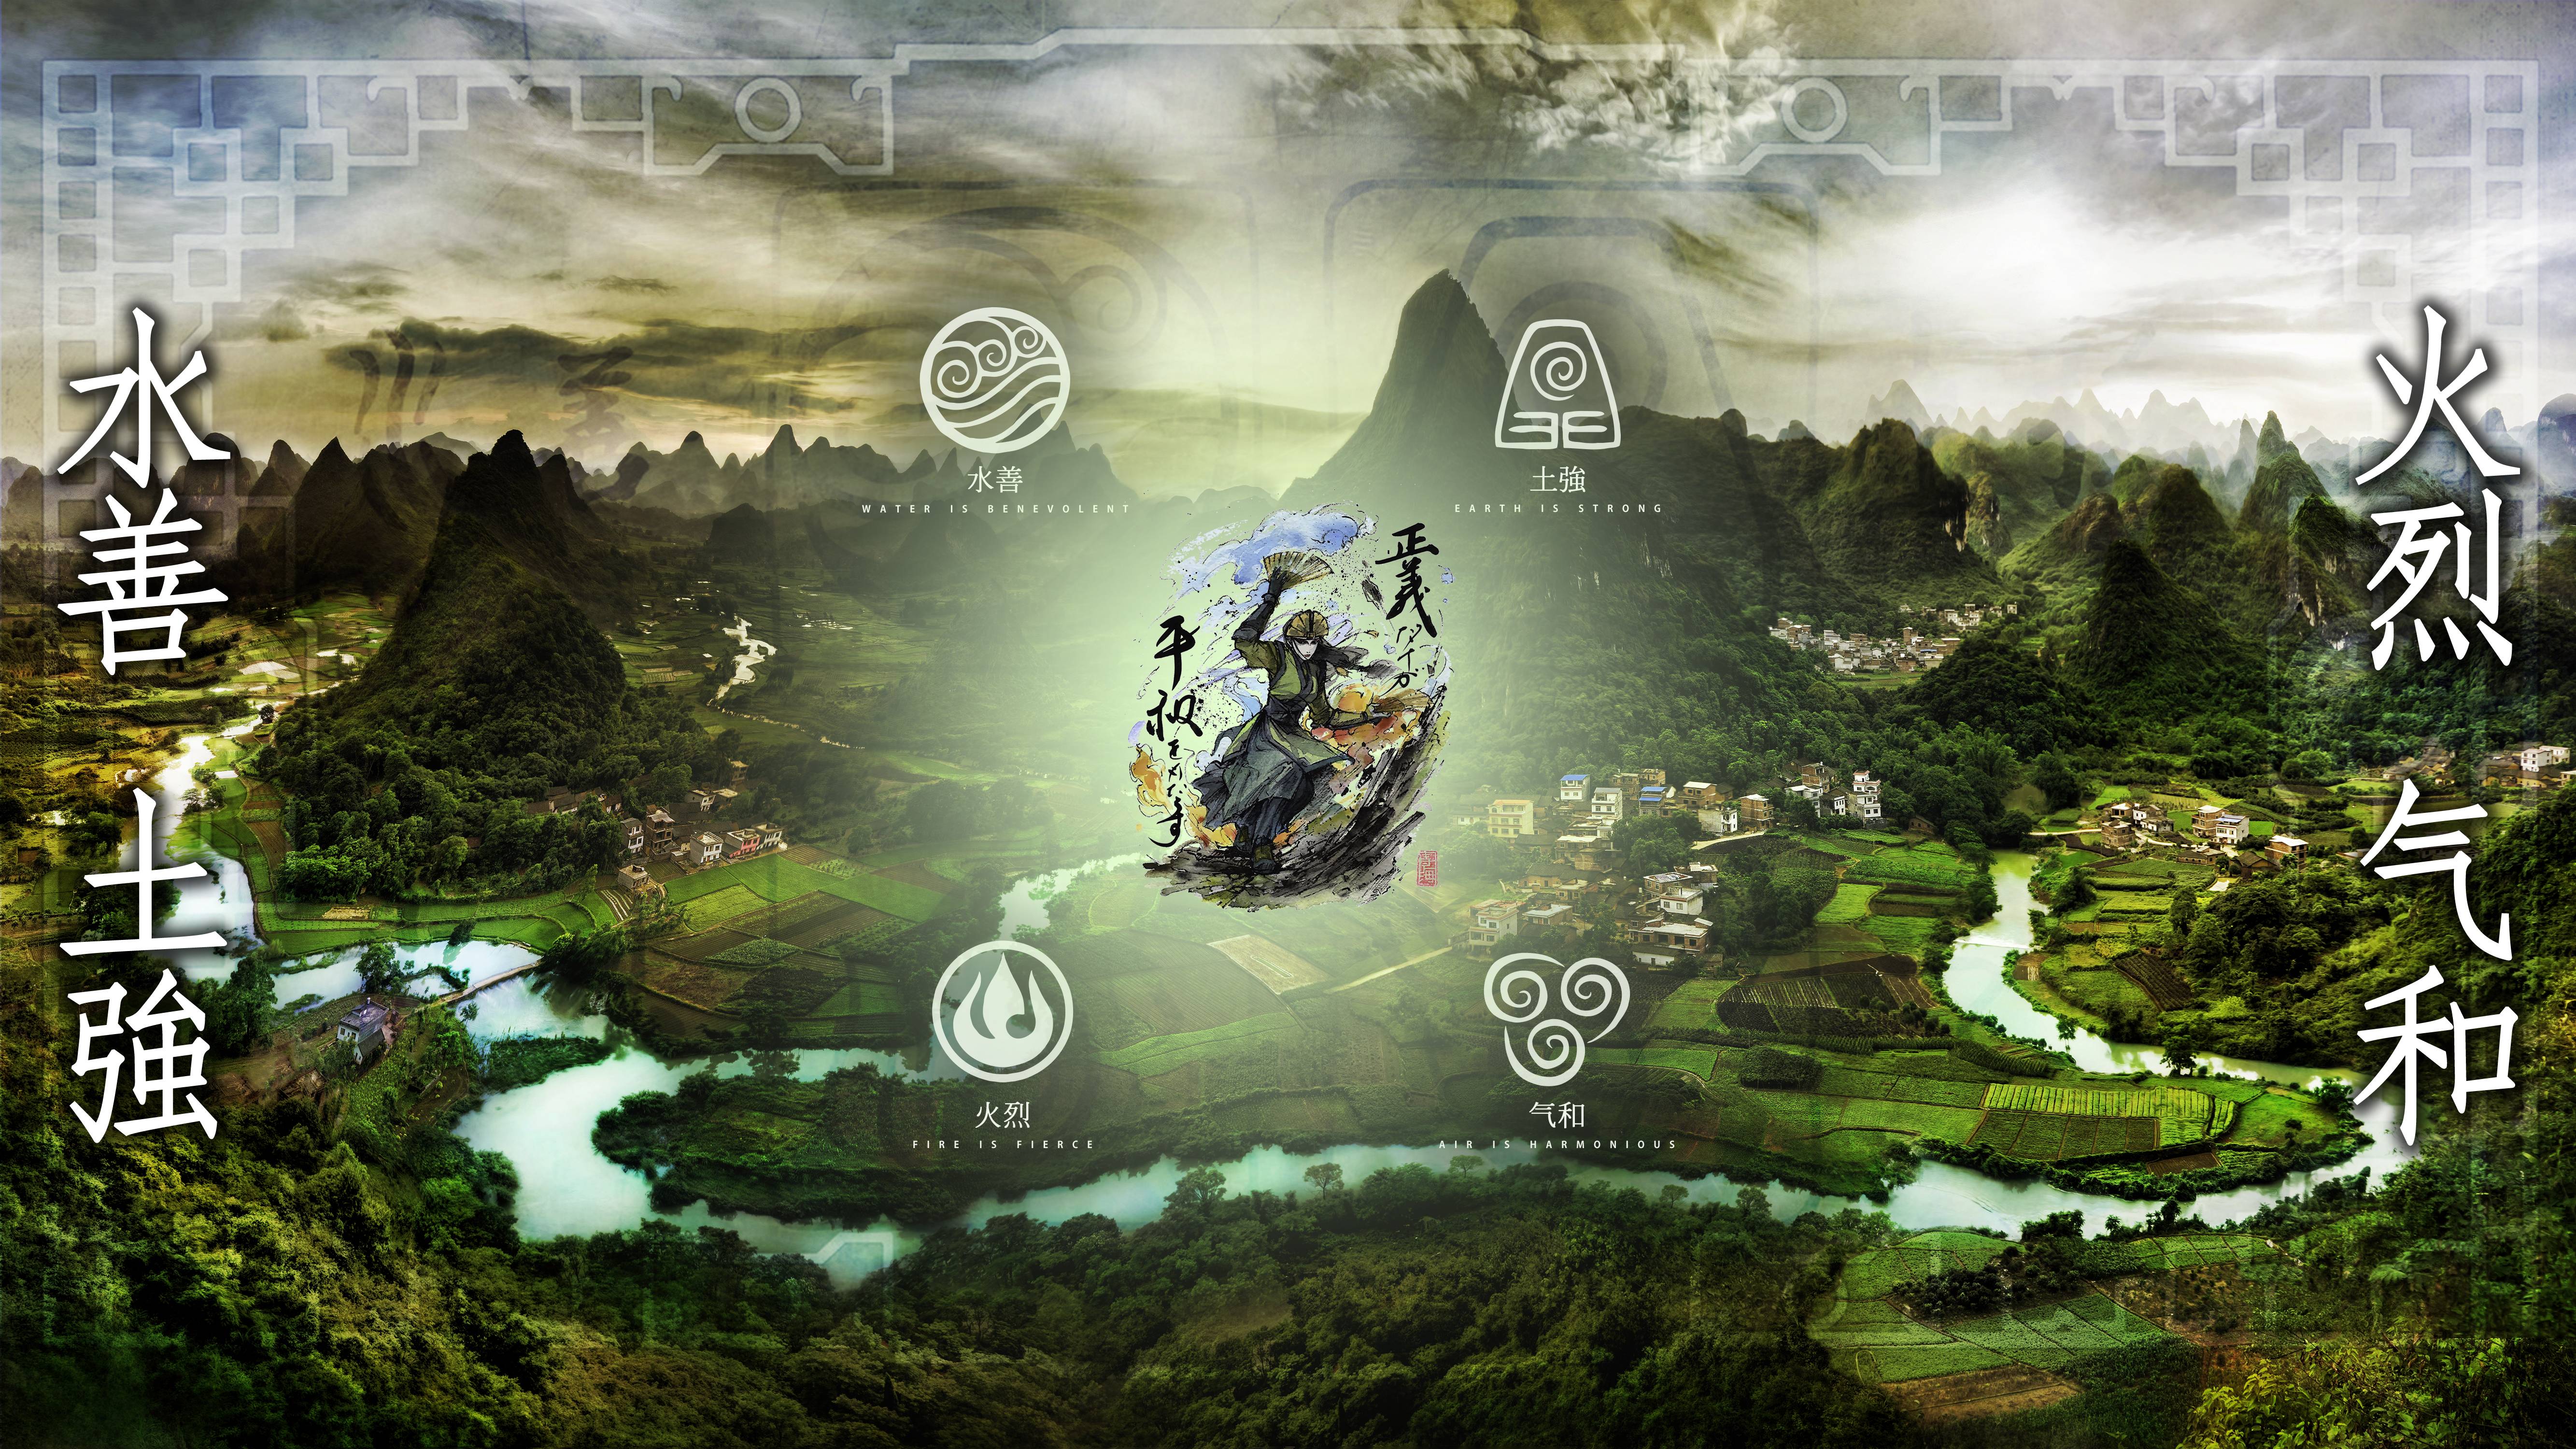 Avatar Kyoshi Wallpaperimgur.com